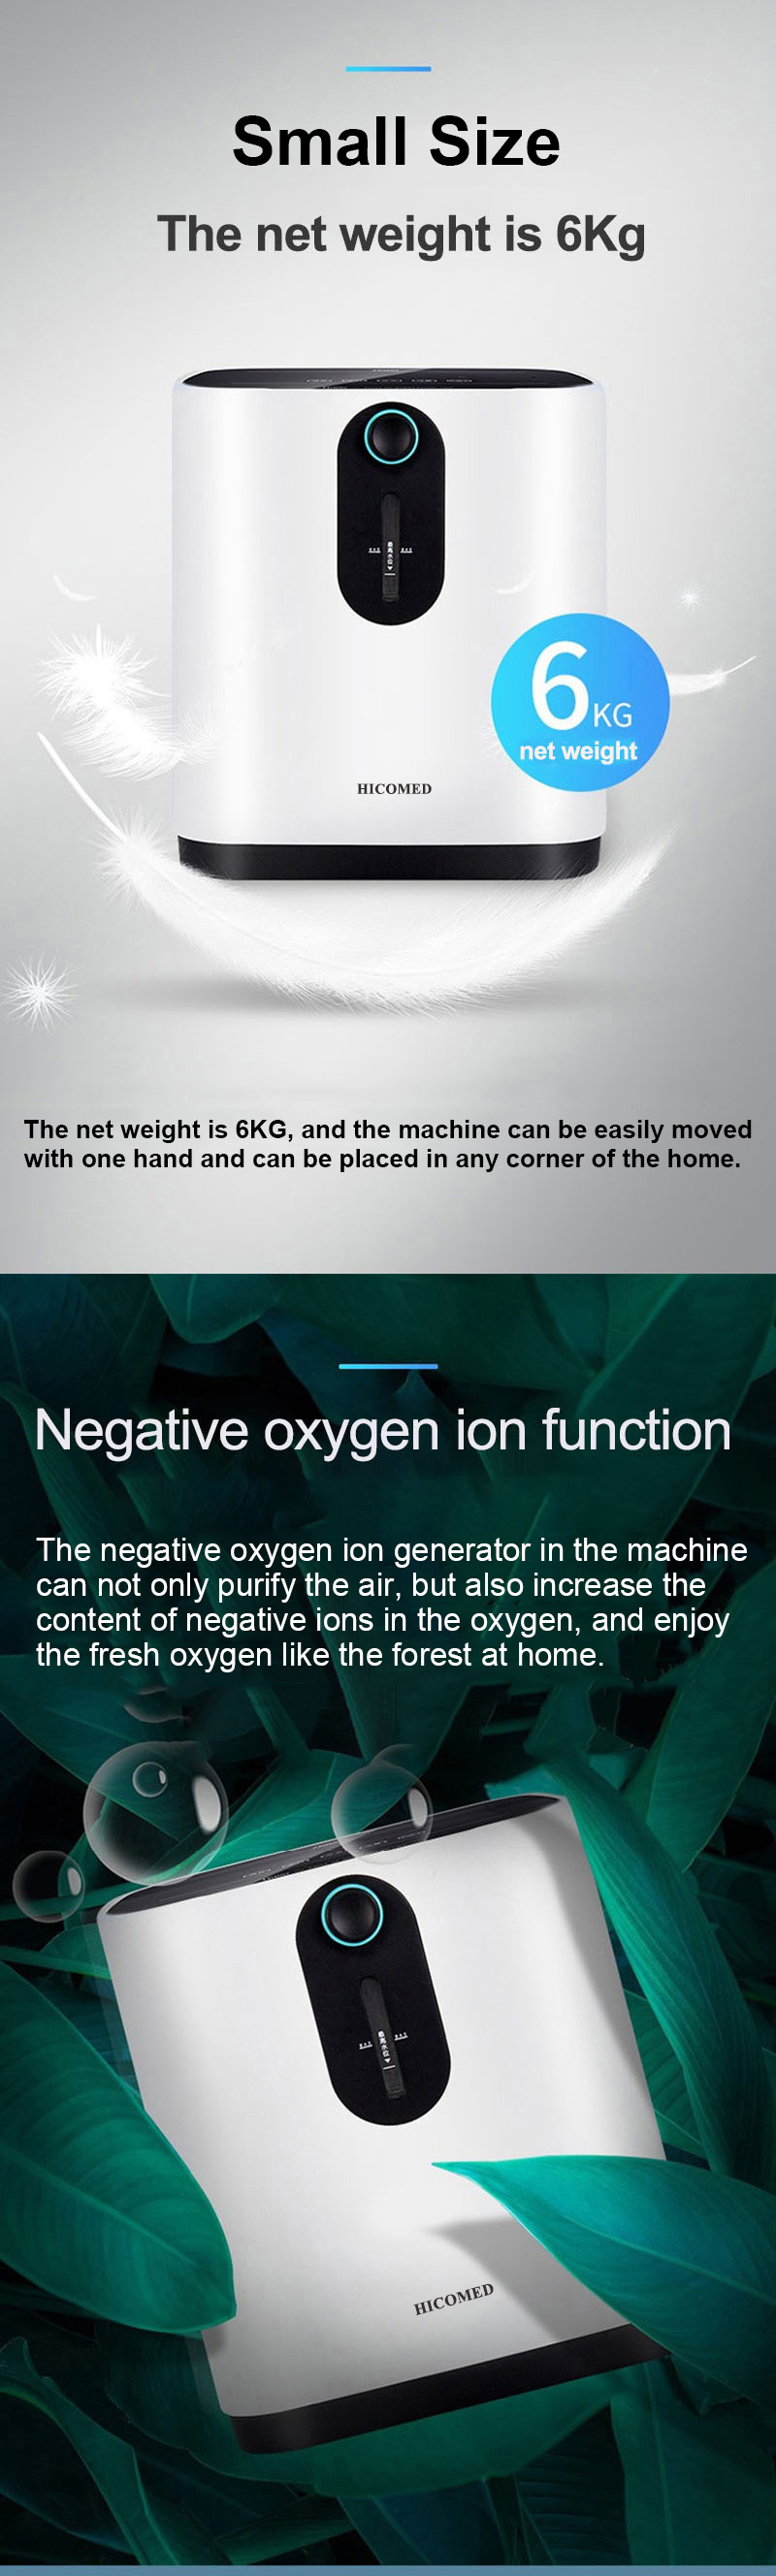 Home use Oxygenerator